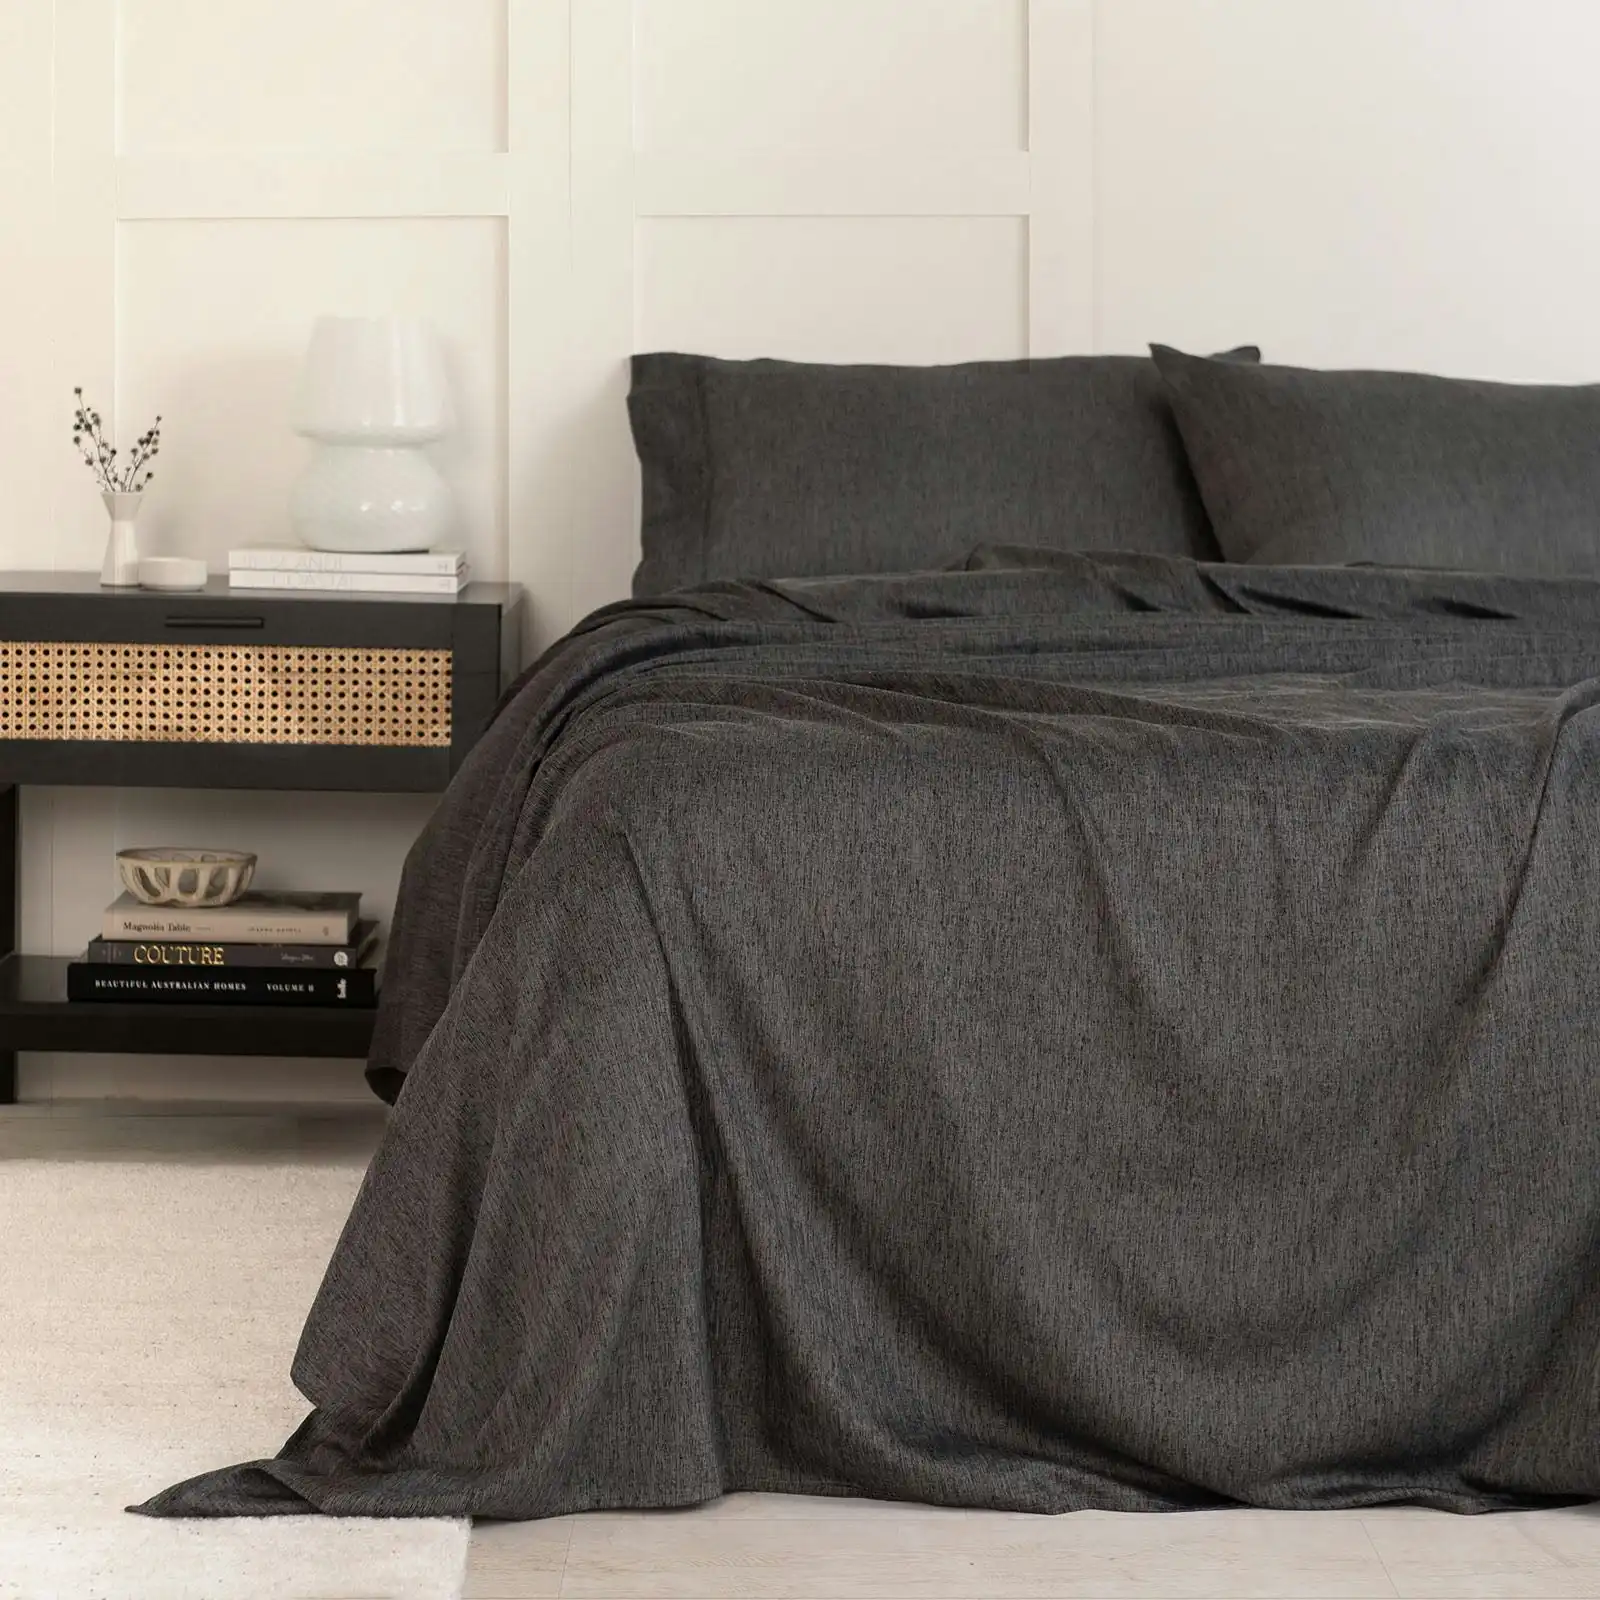 Royal Comfort Flax Linen Blend Sheet Set Bedding Luxury Breathable Ultra Soft